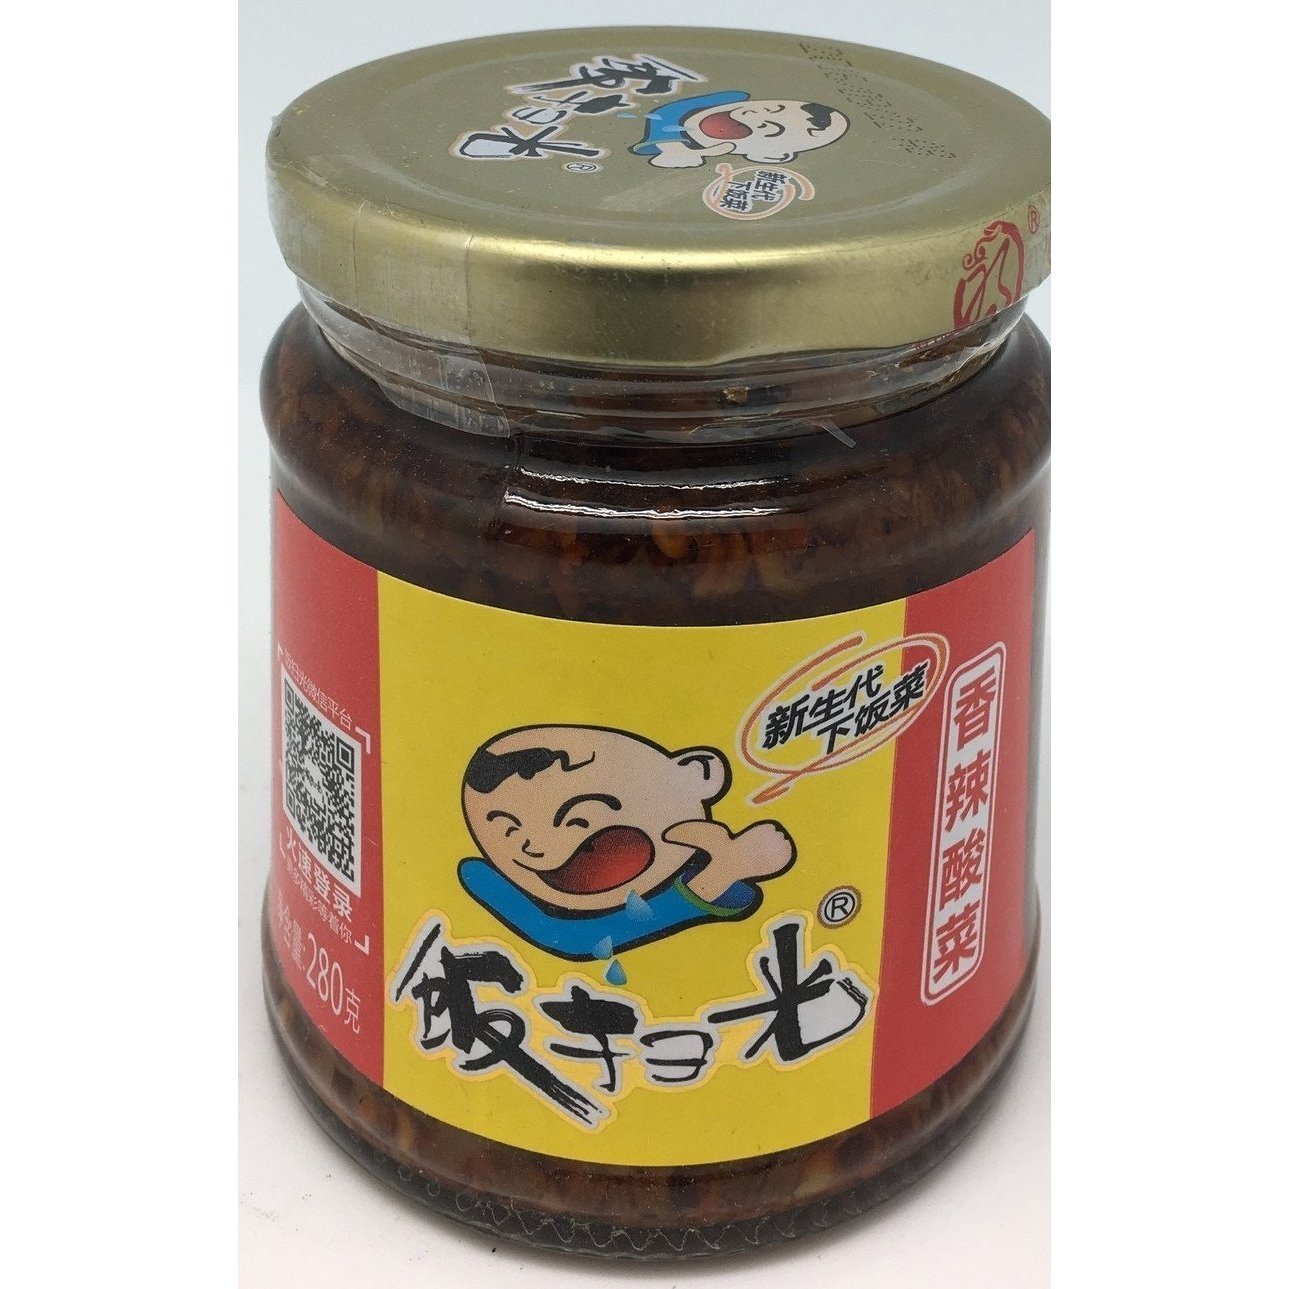 P009S Fan Sao Guang brand - Pickled Sour Vegetables 280g - 12 jar / 1 CTN - New Eastland Pty Ltd - Asian food wholesalers